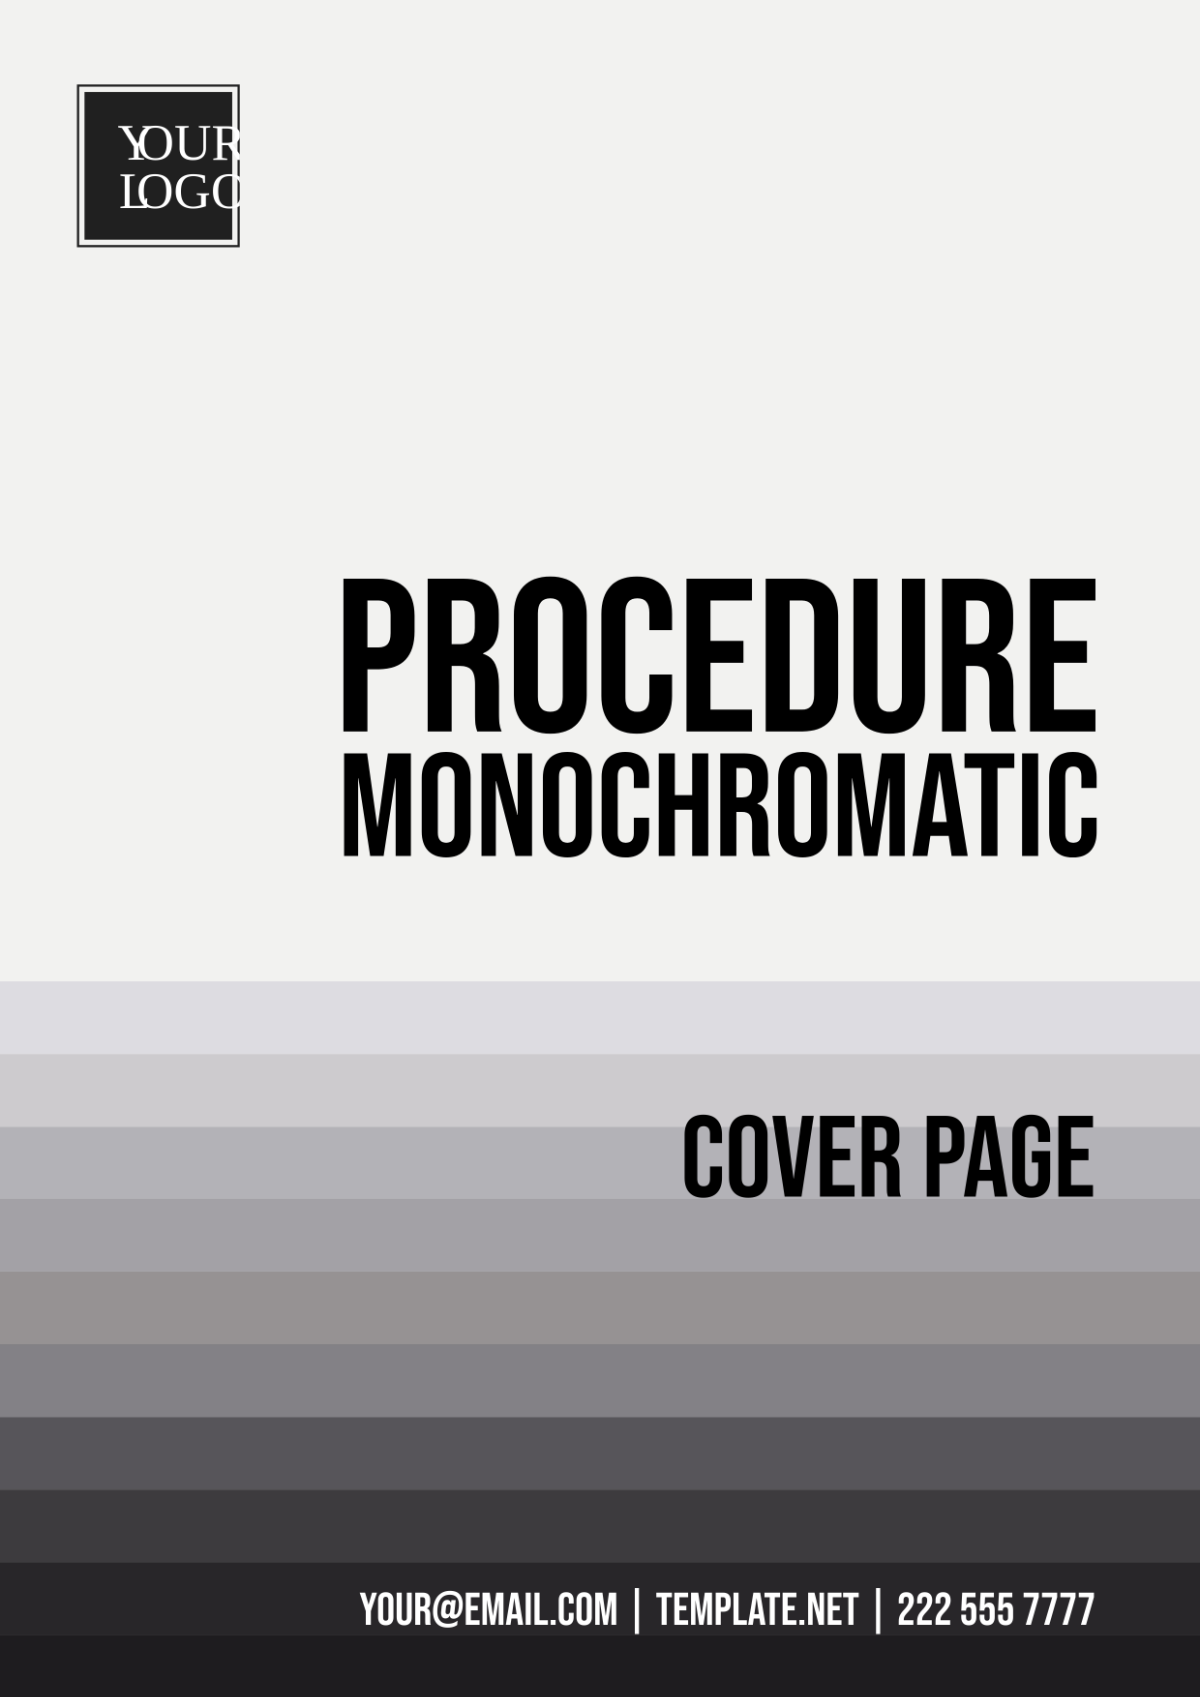 Procedure Monochromatic Cover Page Template